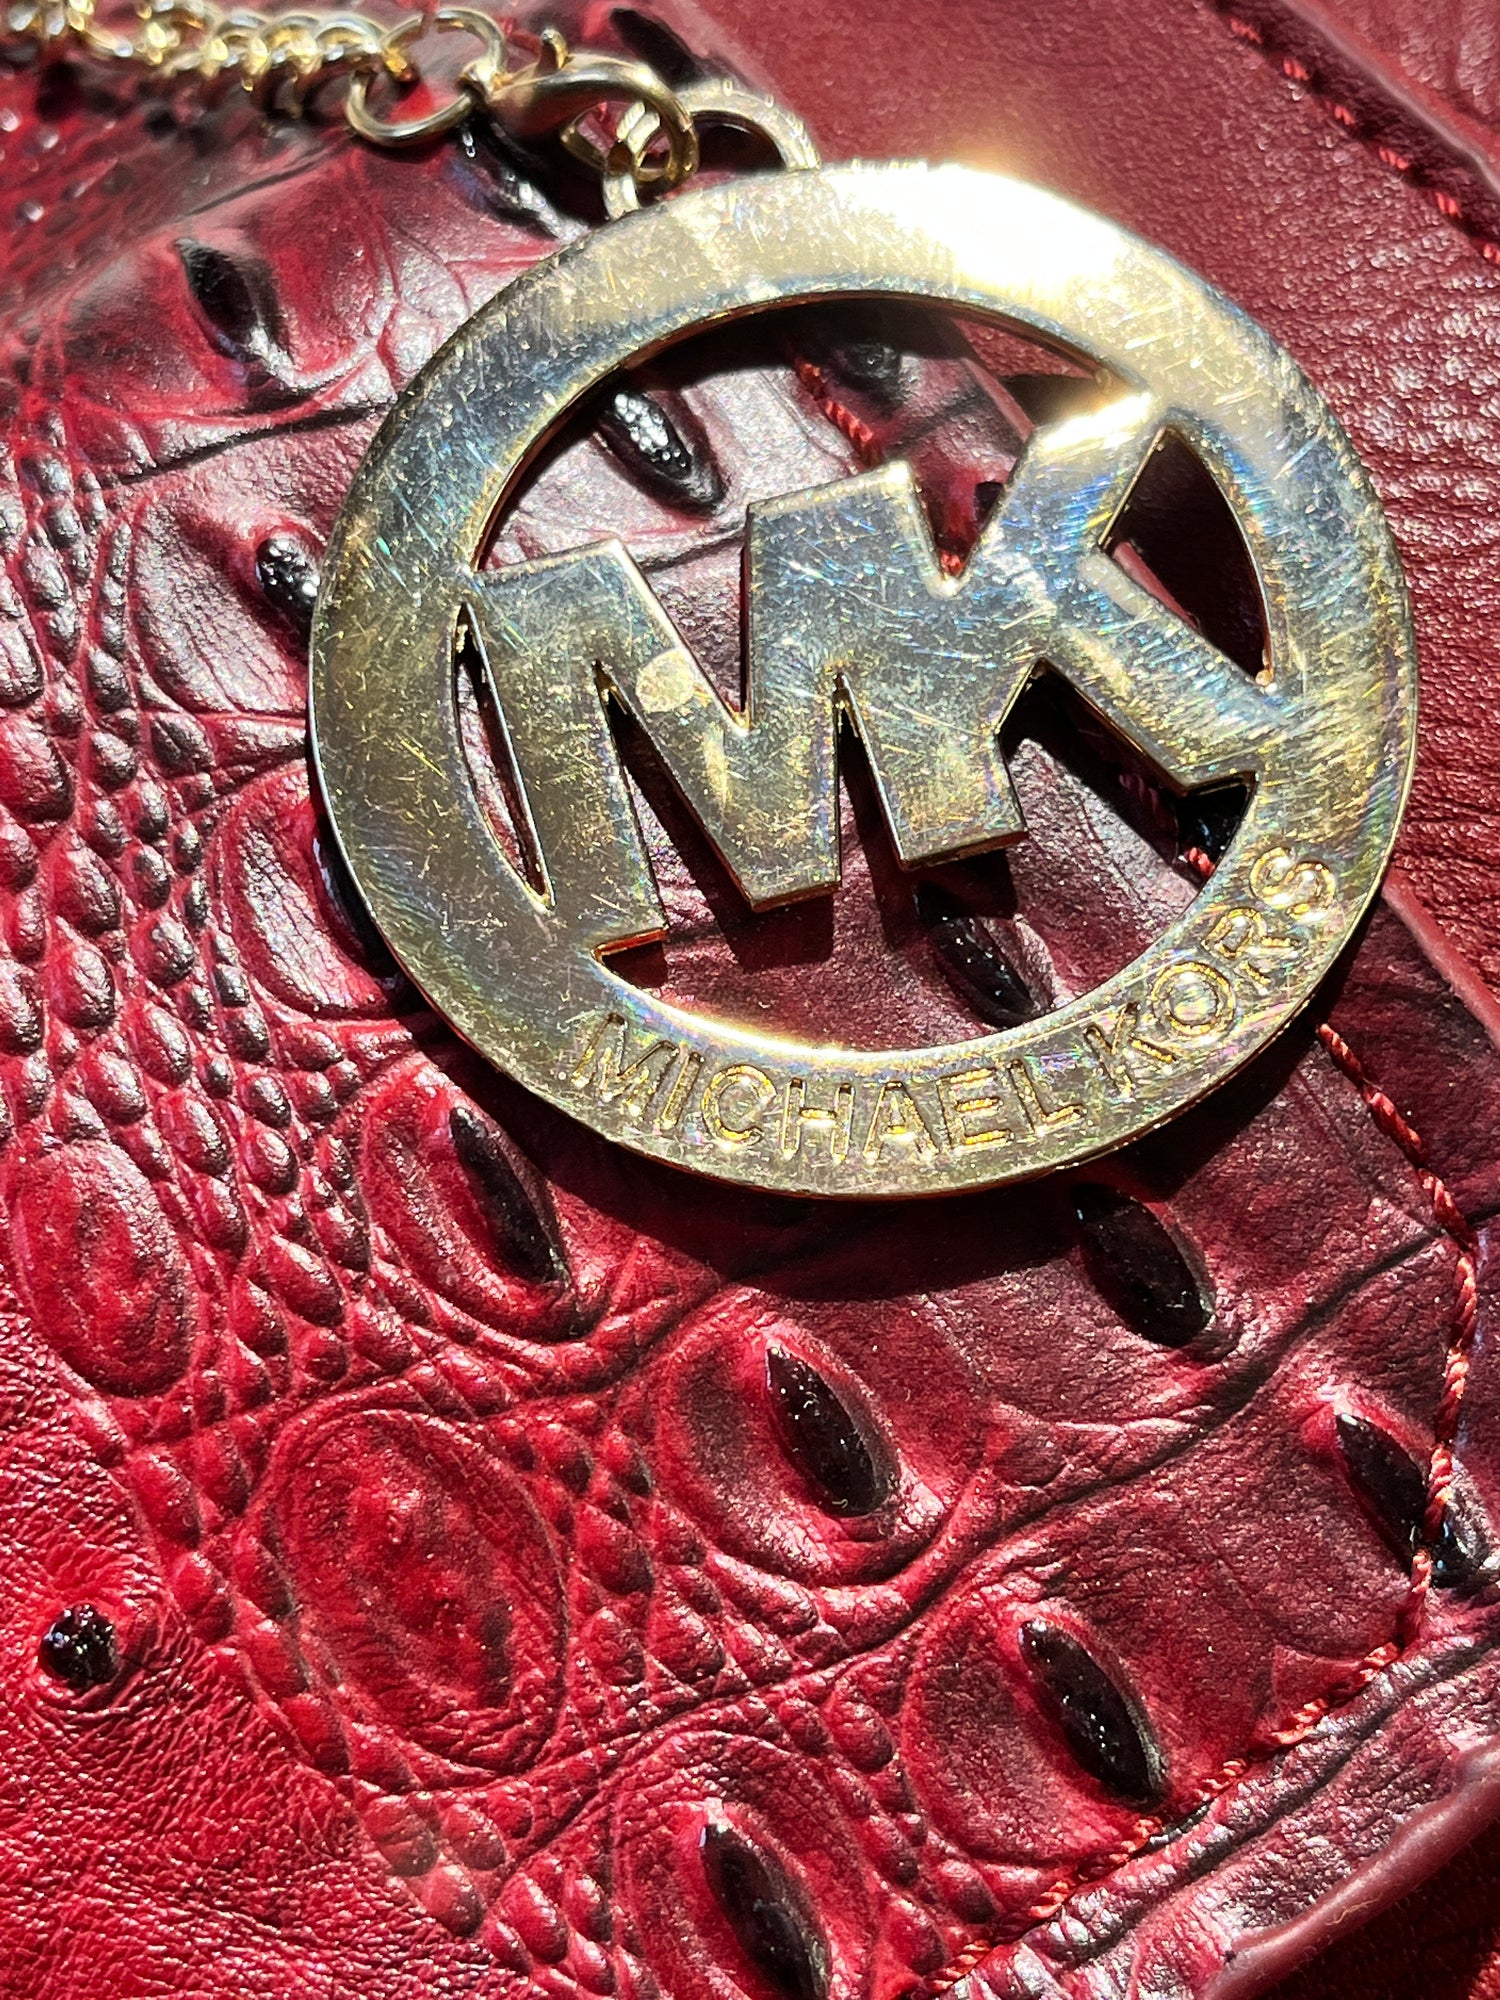 MICHAEL KORS: Michael leather bag - Leather | MICHAEL KORS handbag  30F3G6WS1L online at GIGLIO.COM